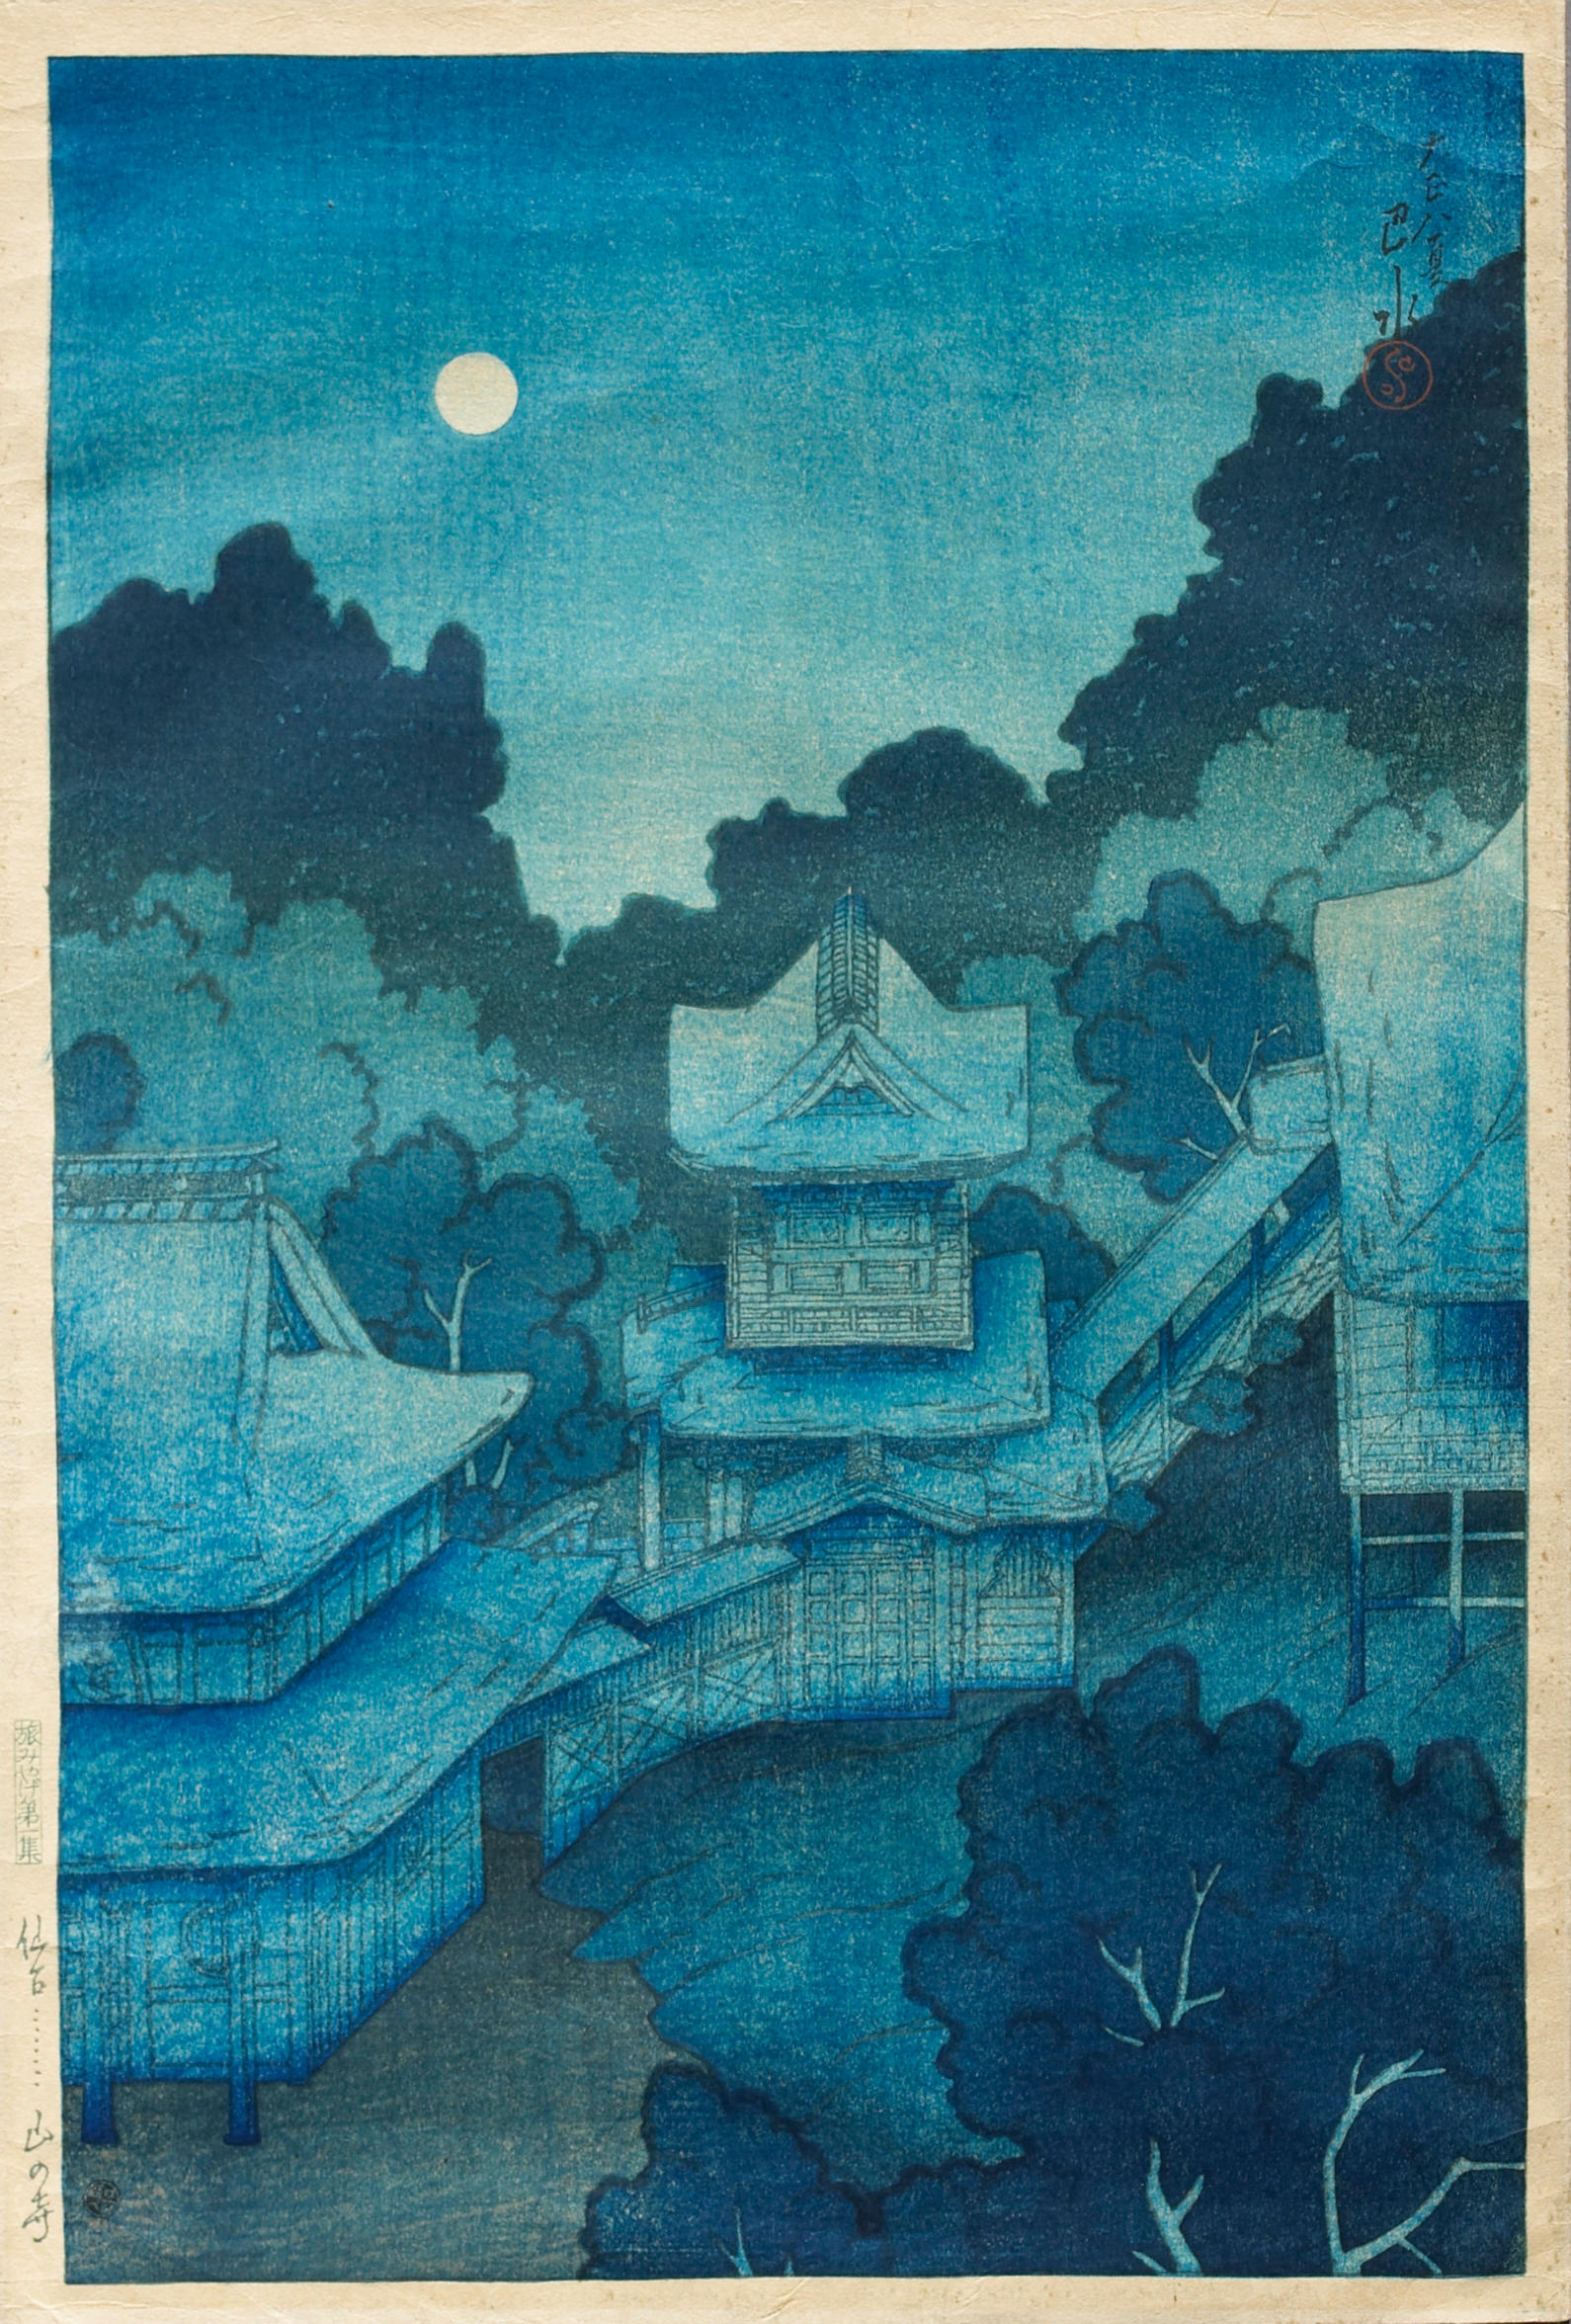 Kawase Hasui (1883-1957) One modern print